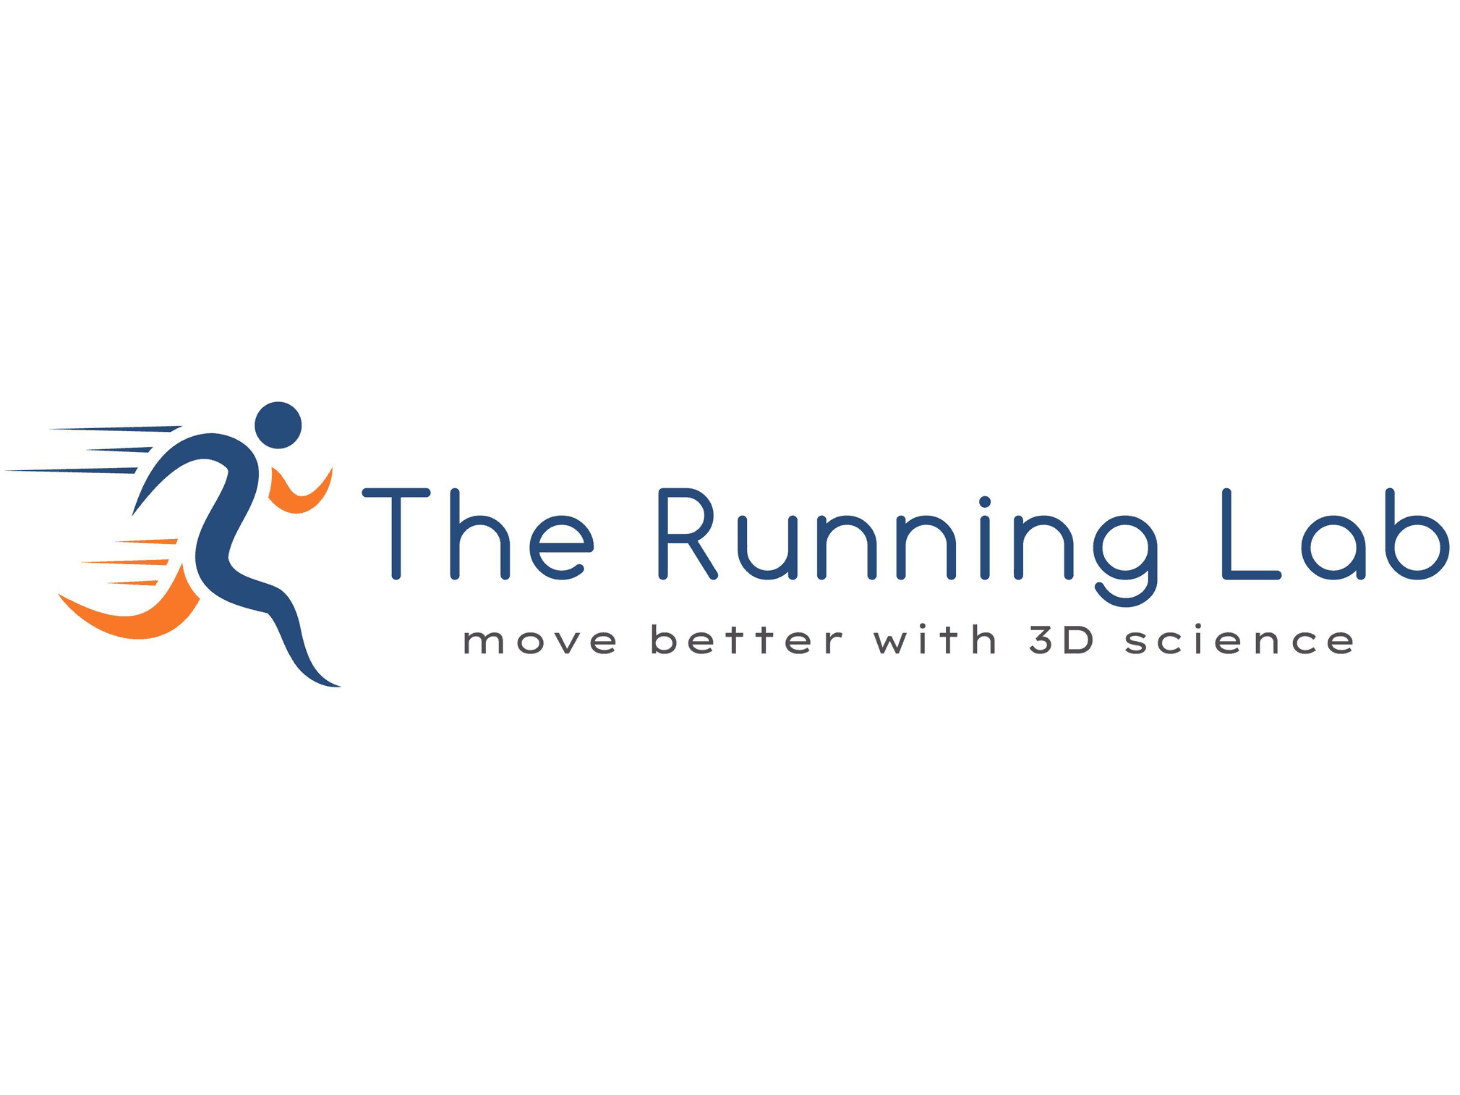 The Running Lab image